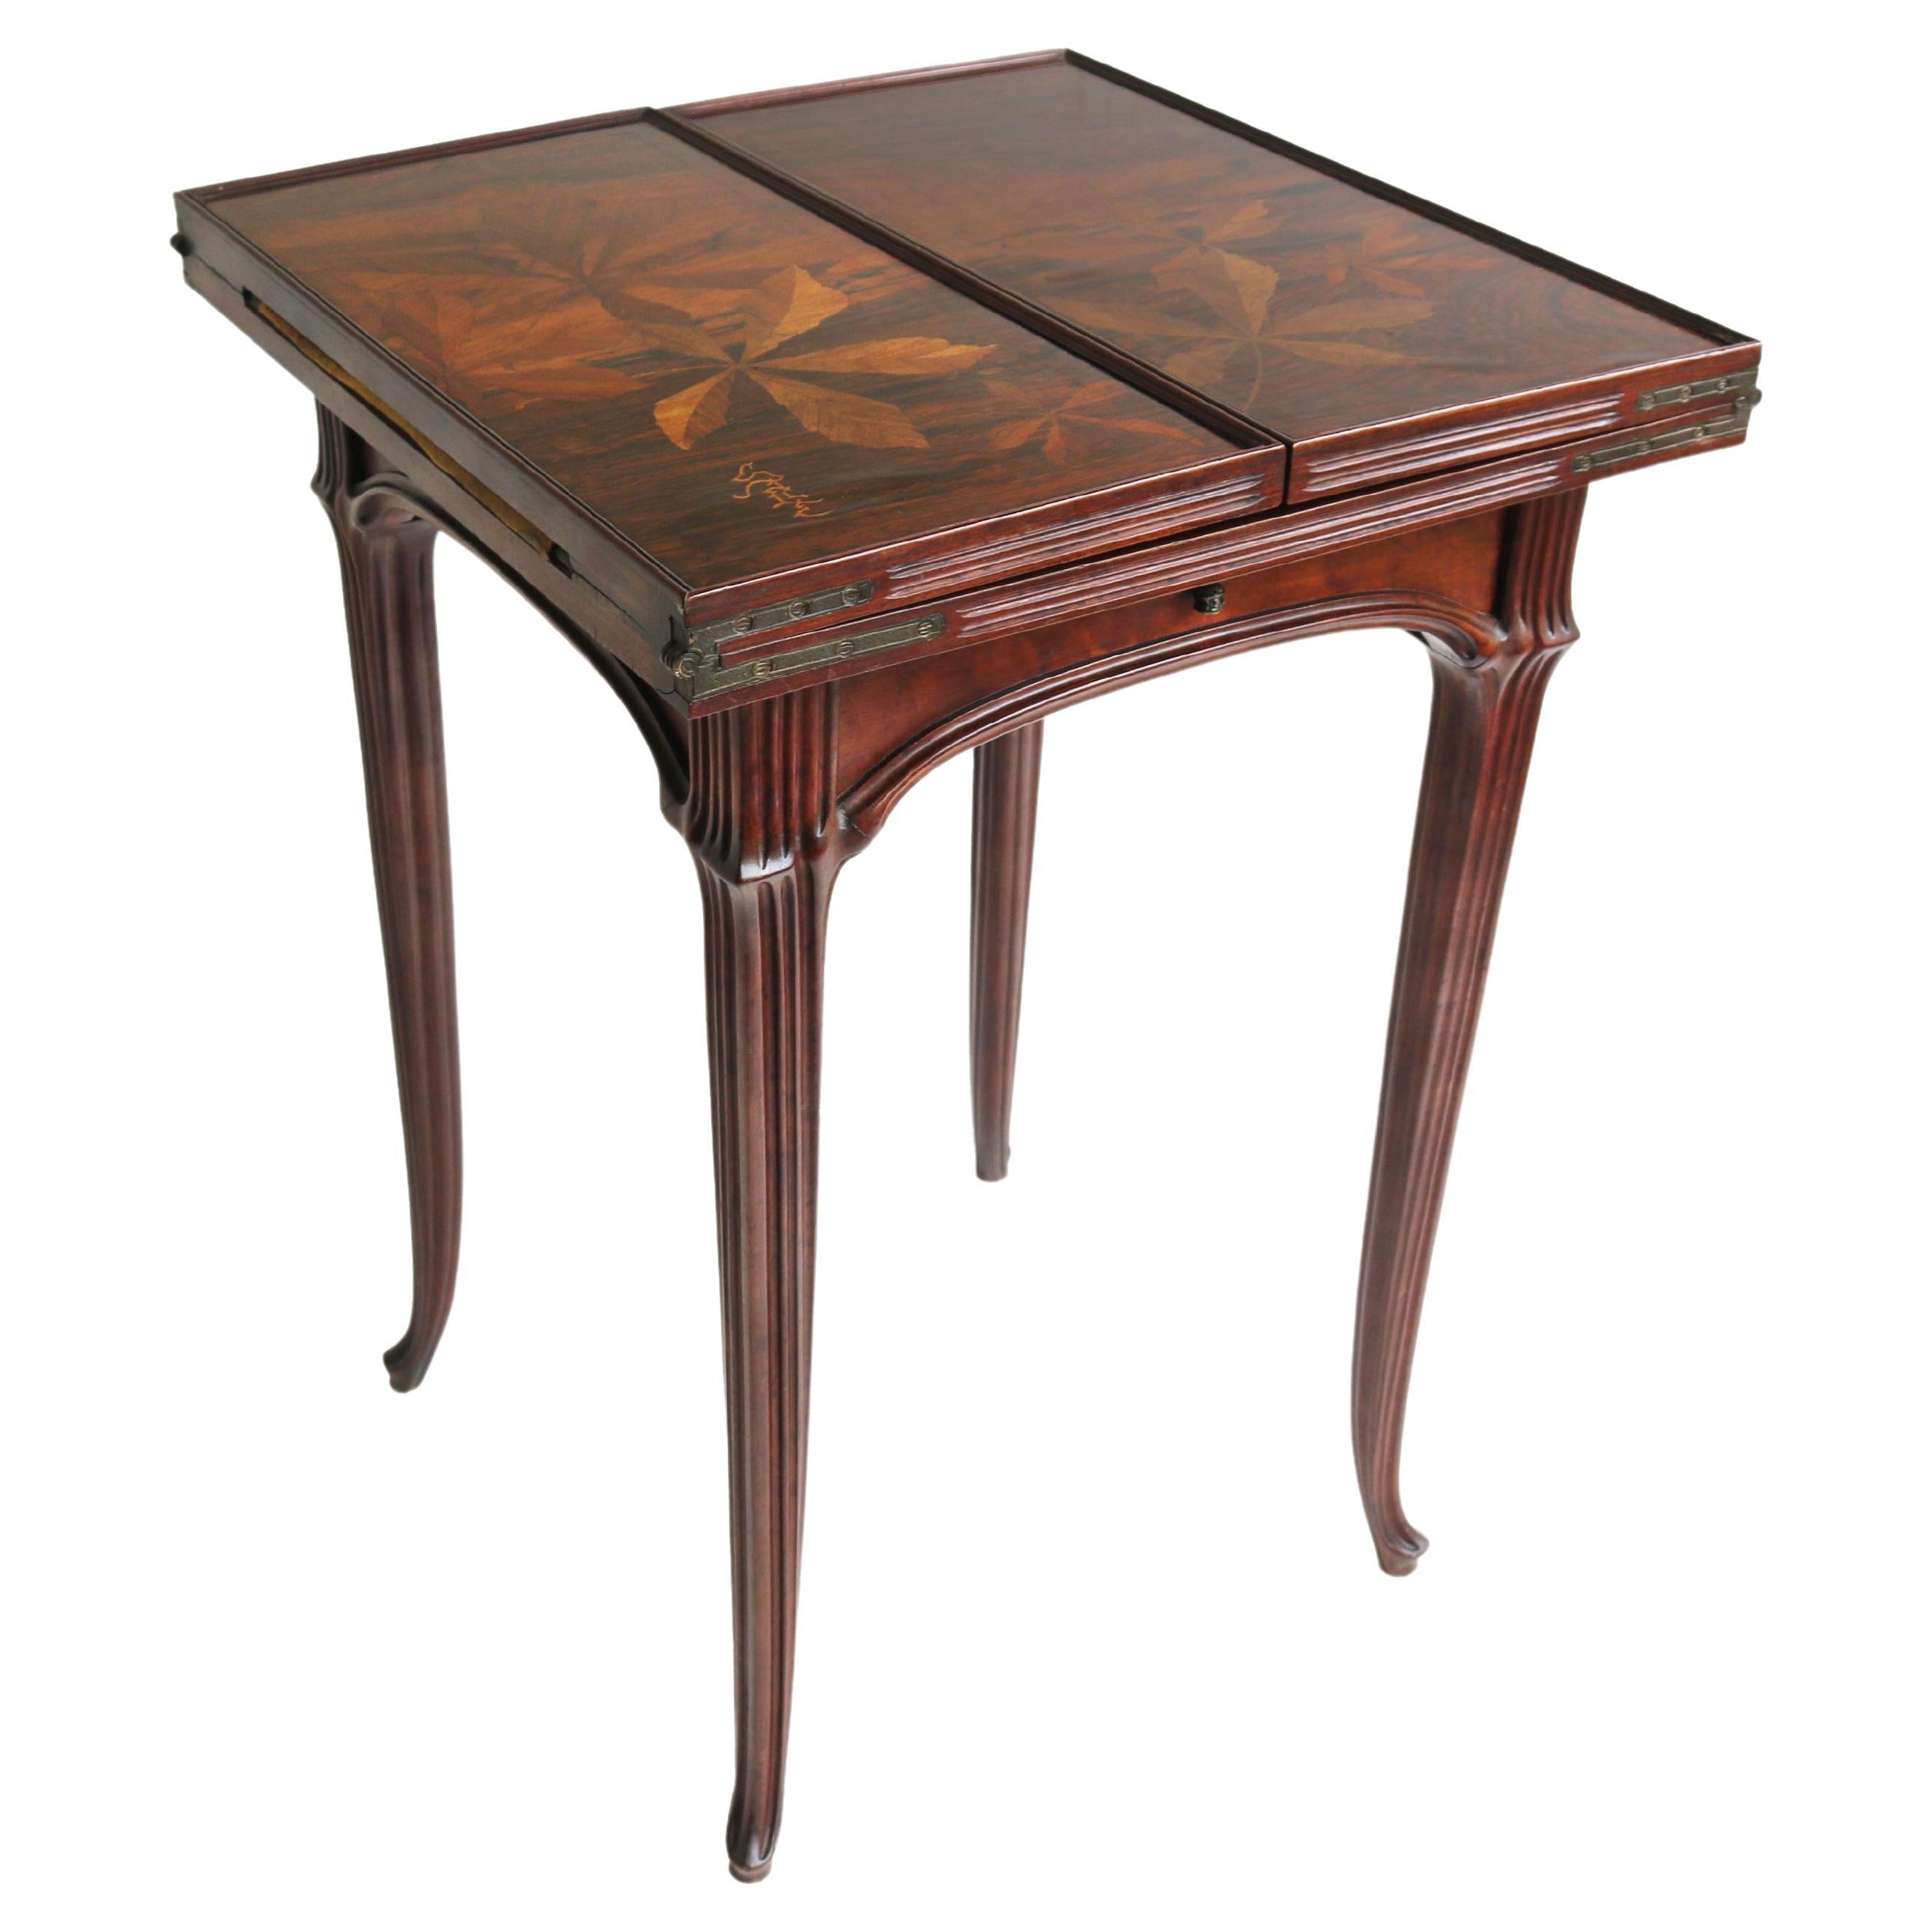 Original French Art Nouveau game table / side table by Emile Gallé 1905 chestnut For Sale